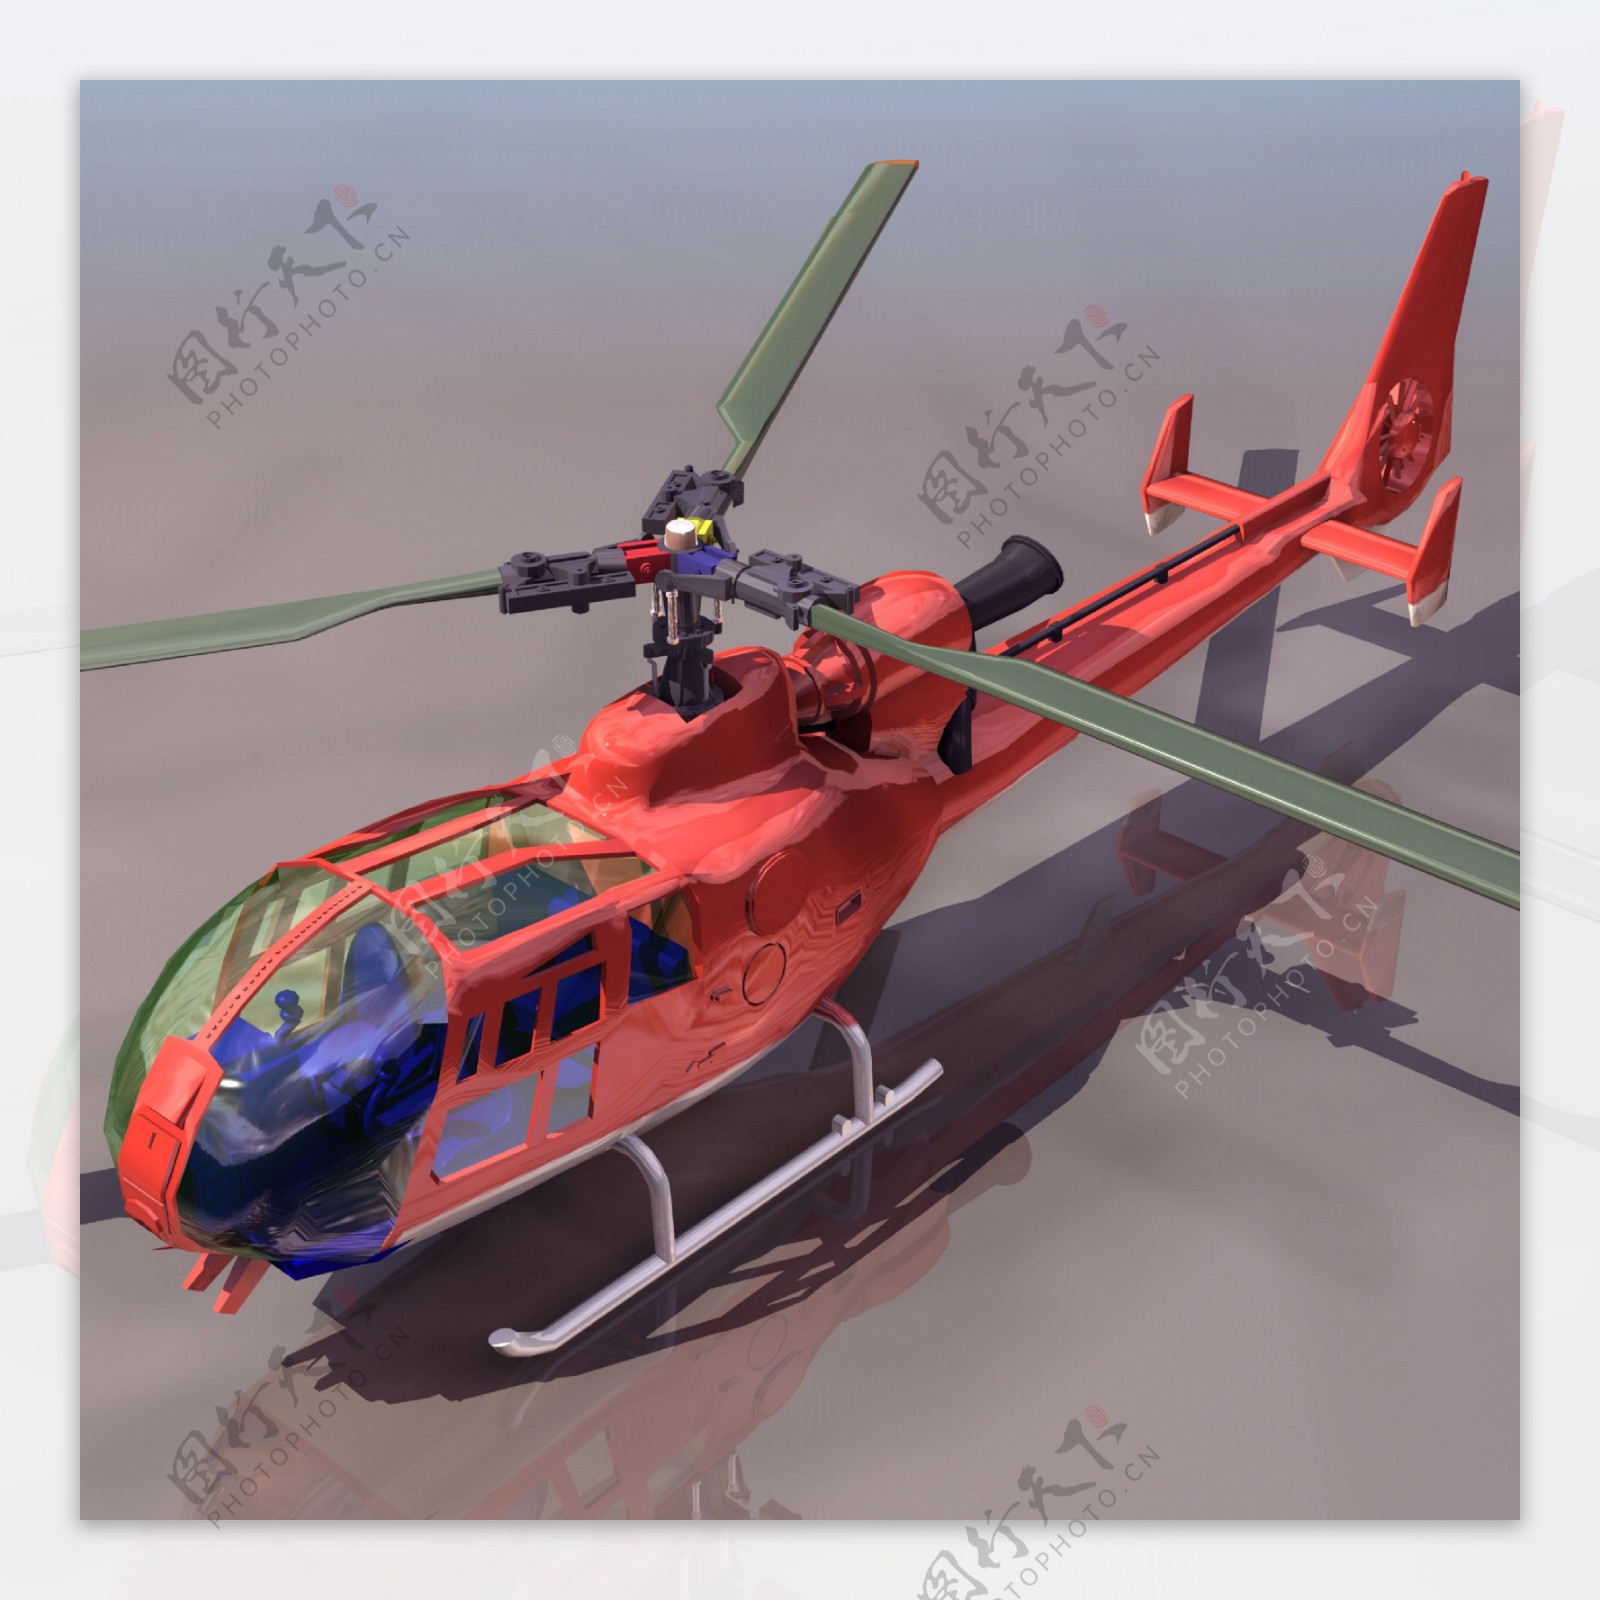 THELI直升机模型018